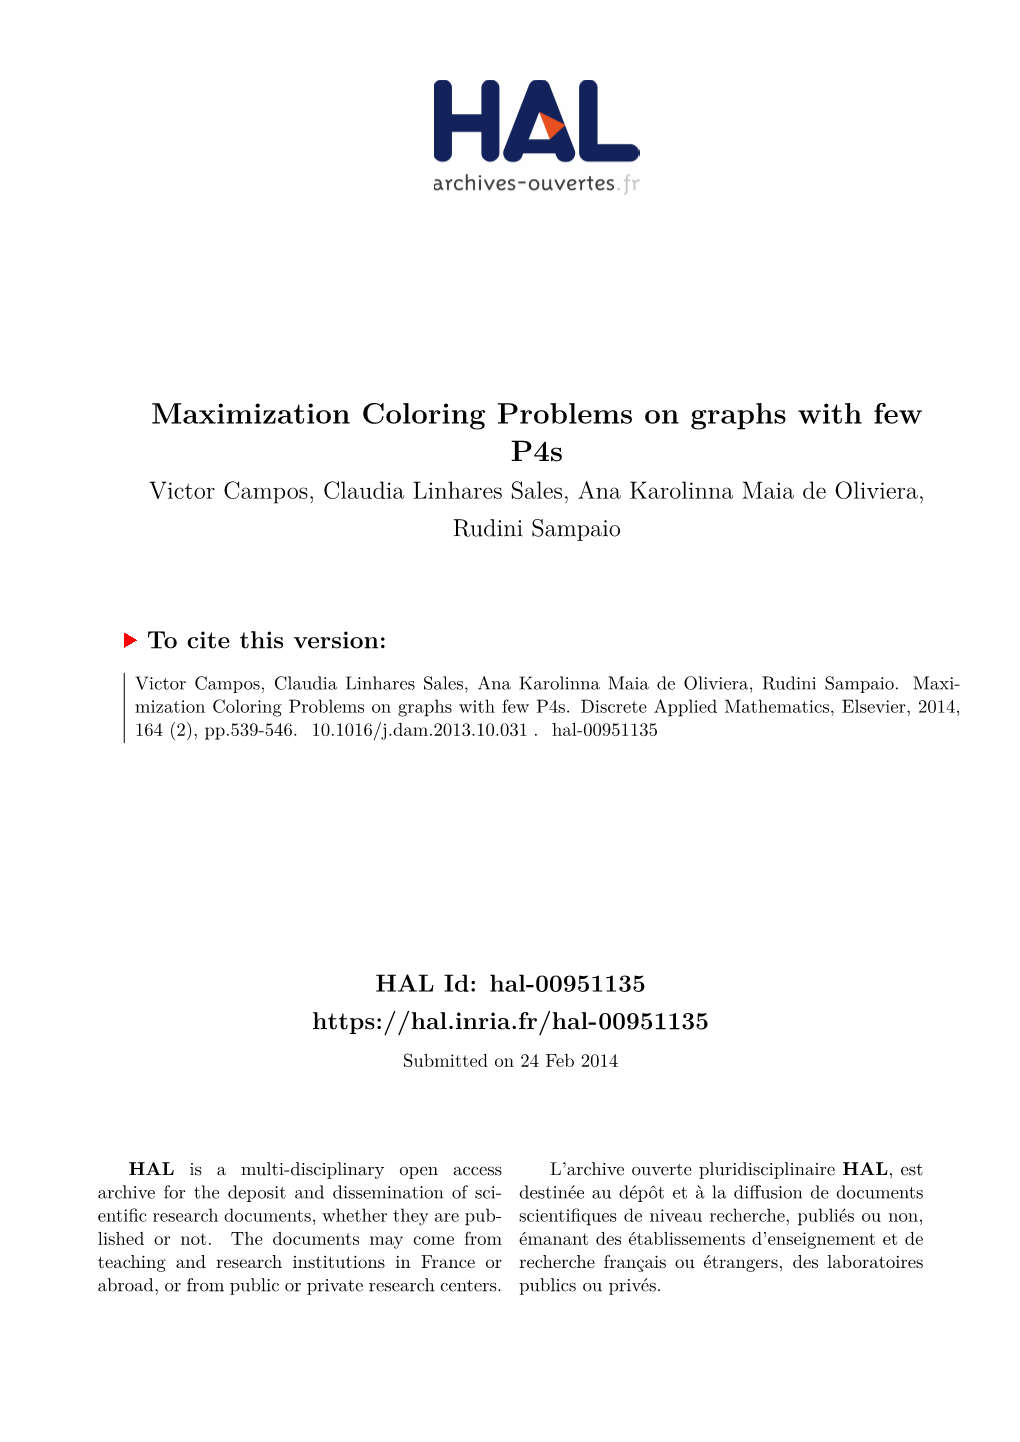 Maximization Coloring Problems on Graphs with Few P4s Victor Campos, Claudia Linhares Sales, Ana Karolinna Maia De Oliviera, Rudini Sampaio